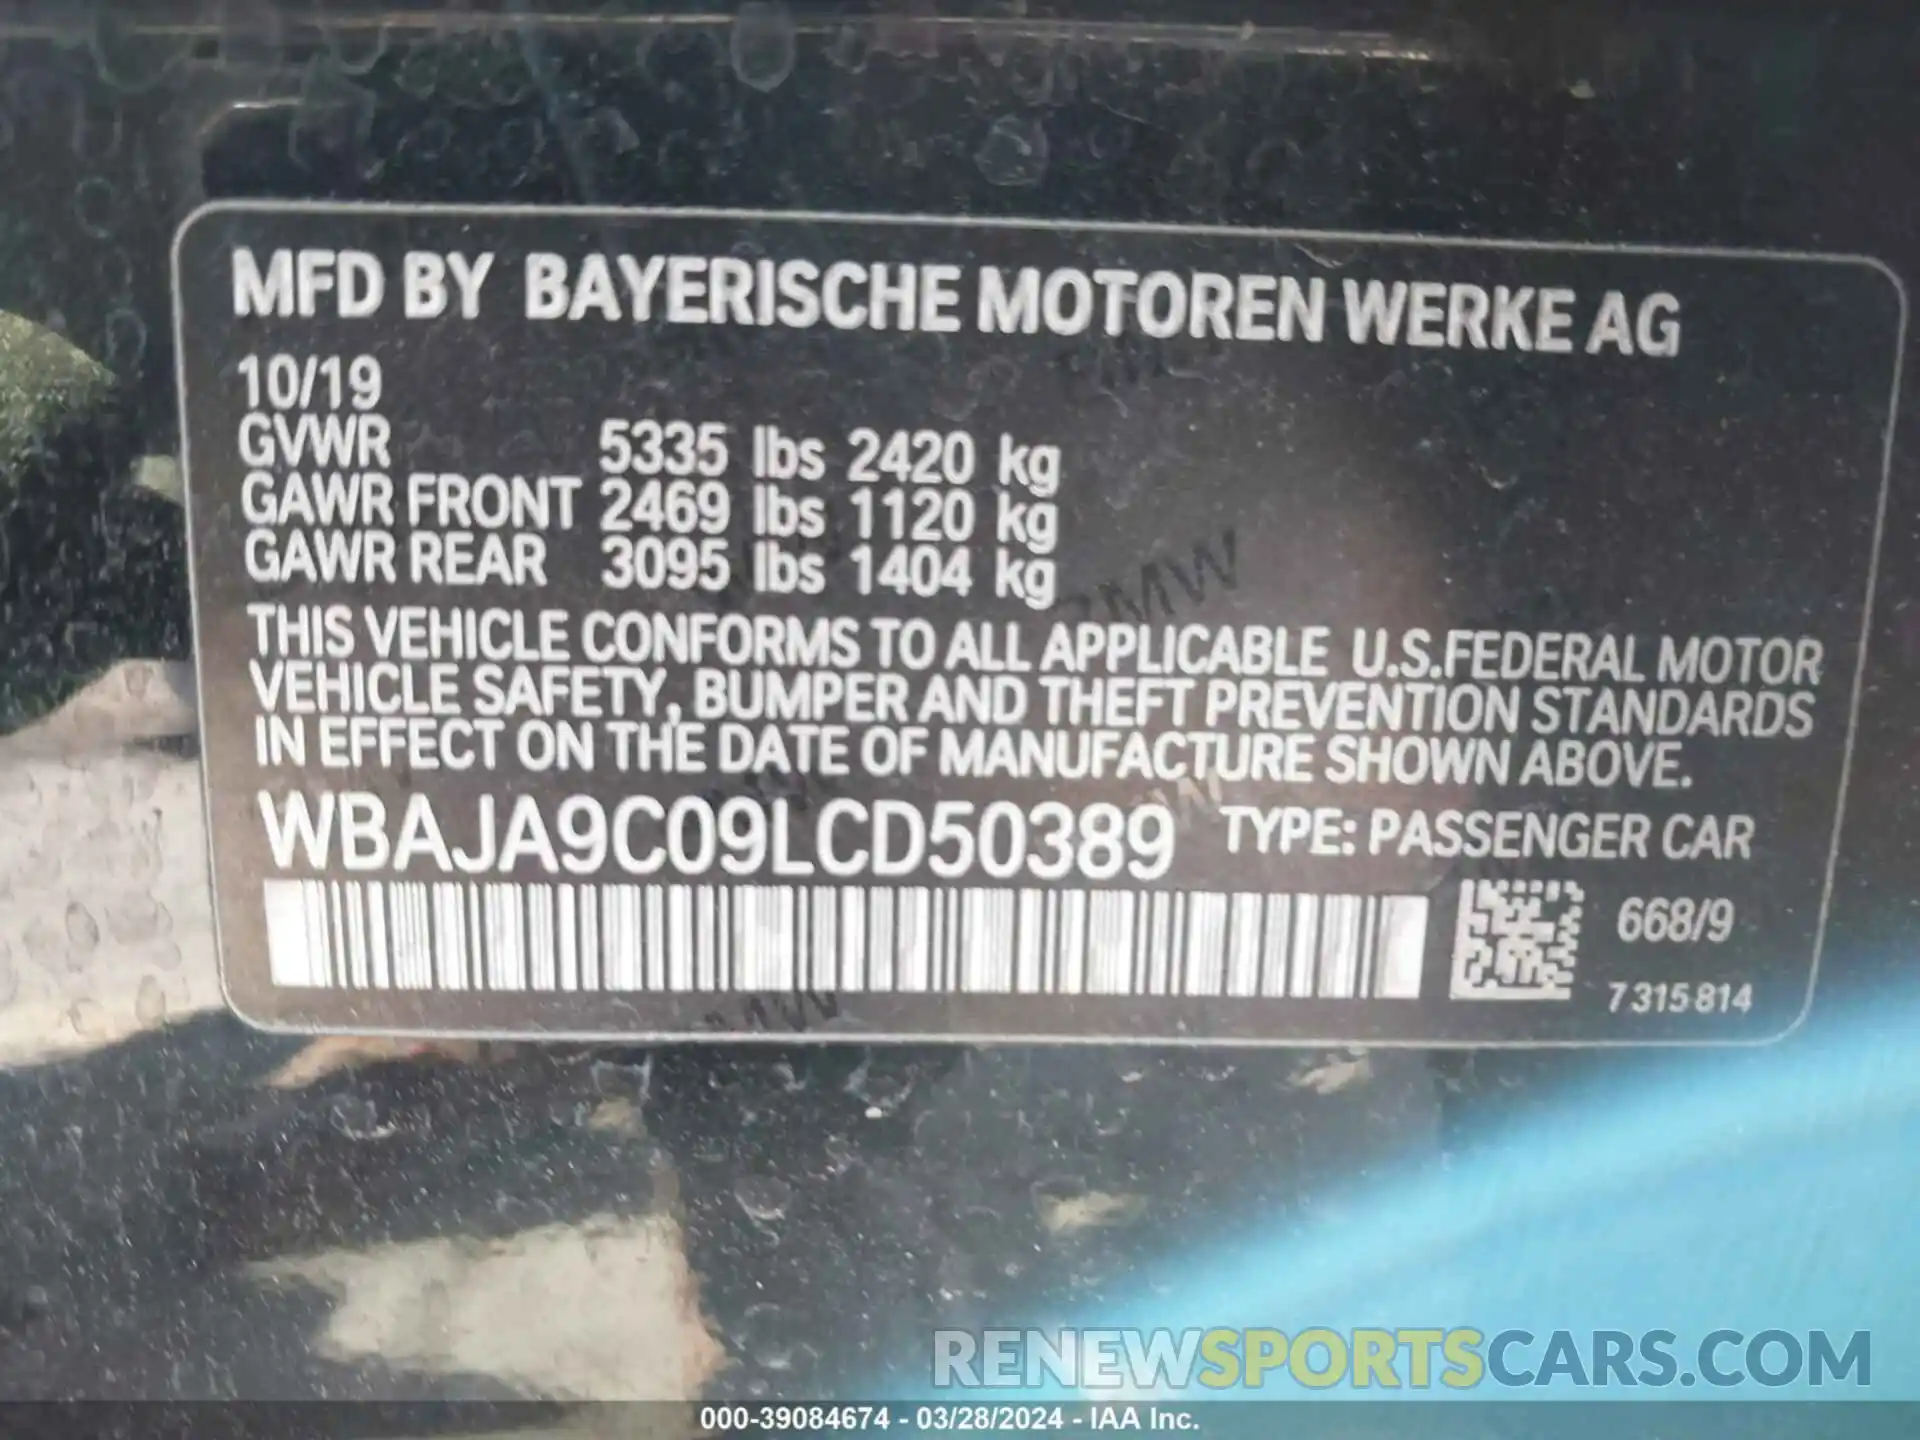 9 Photograph of a damaged car WBAJA9C09LCD50389 BMW 530E 2020